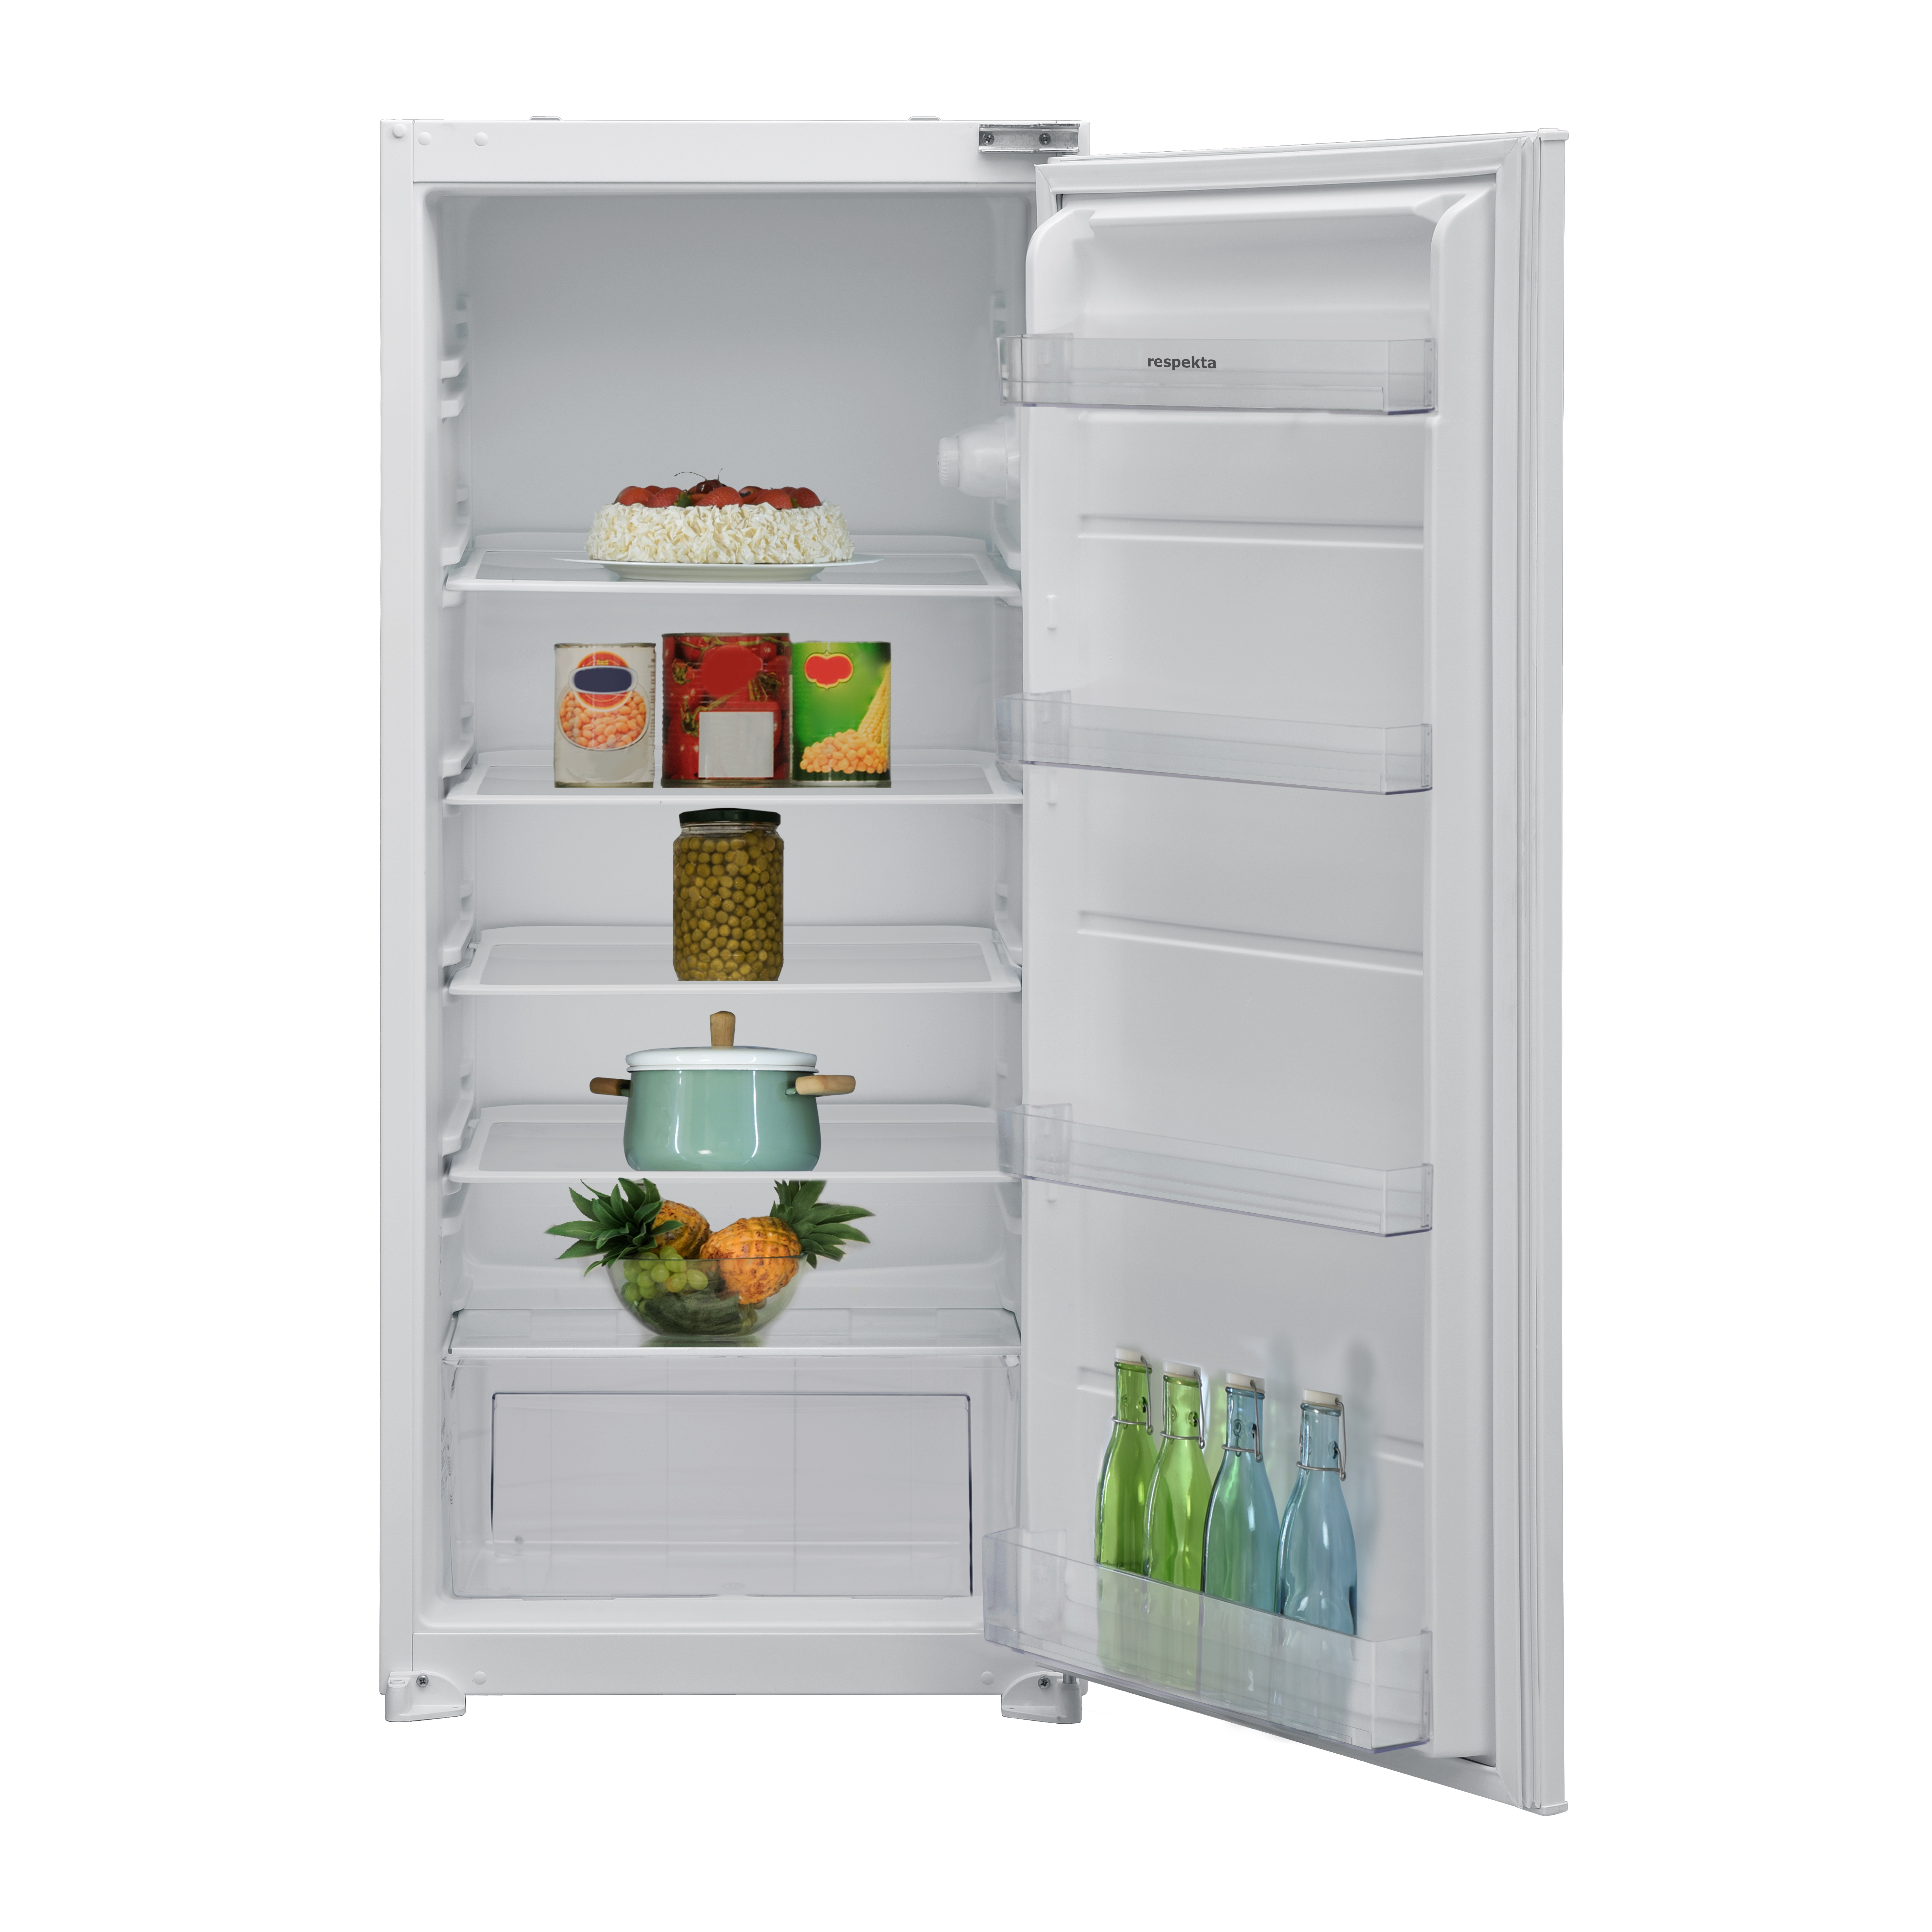 respekta Kühlschrank Einbaukühlschrank Vollraumkühlschrank